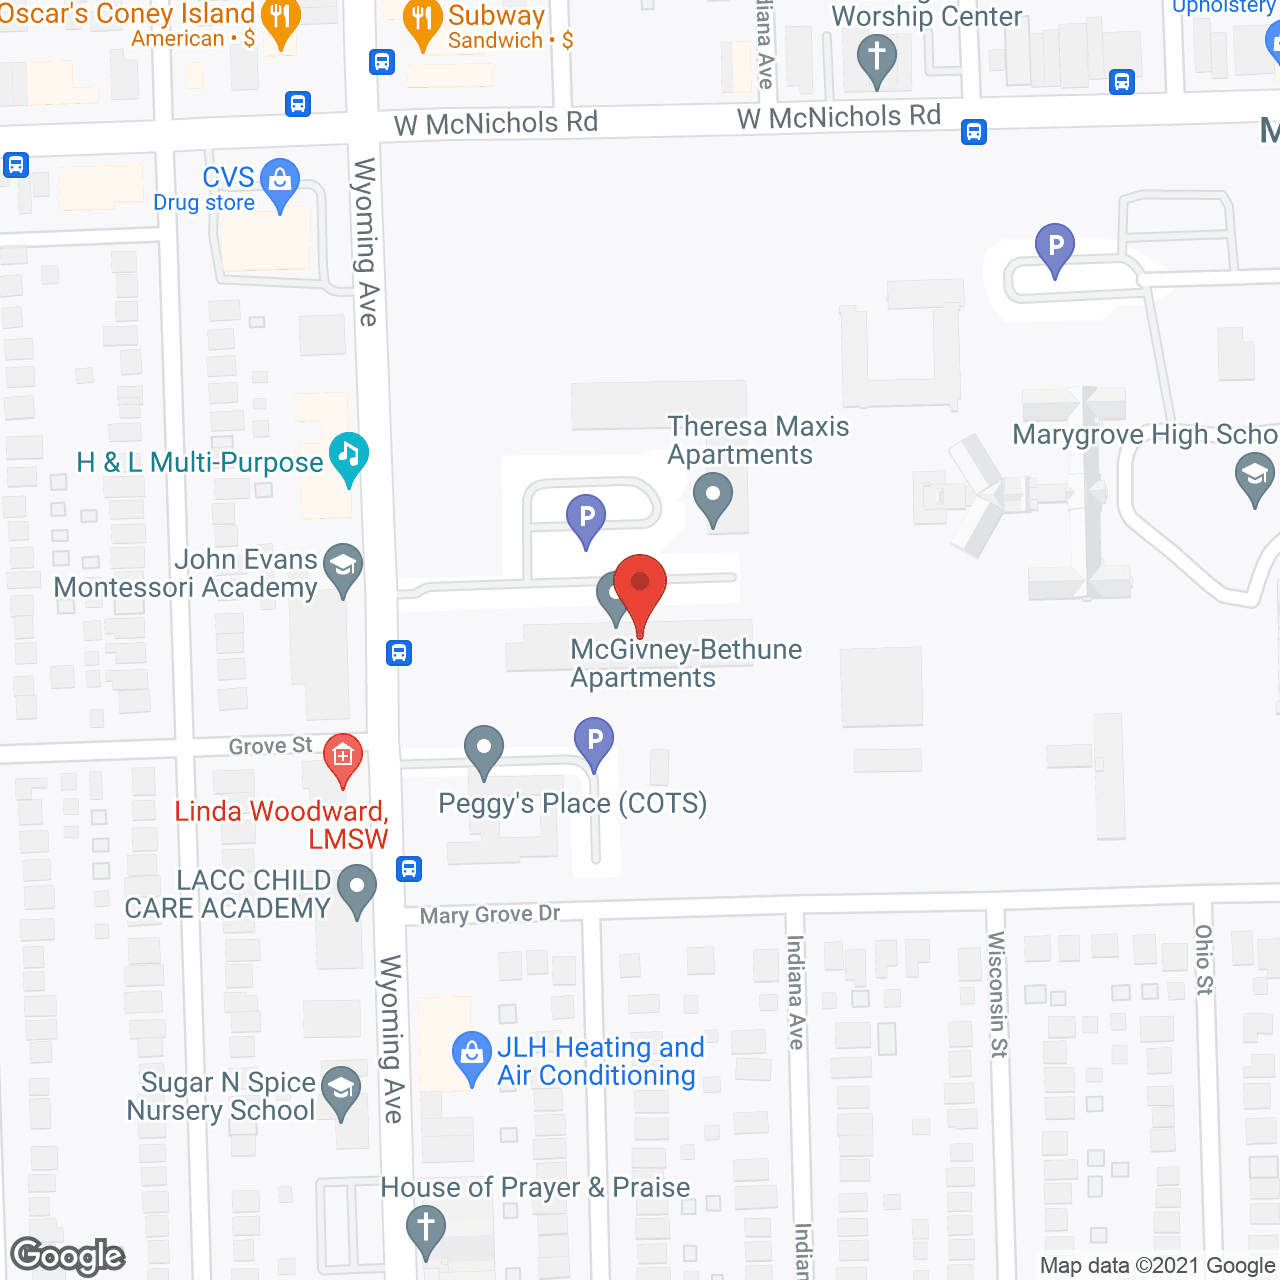 McGivney-Bethune Apartments in google map